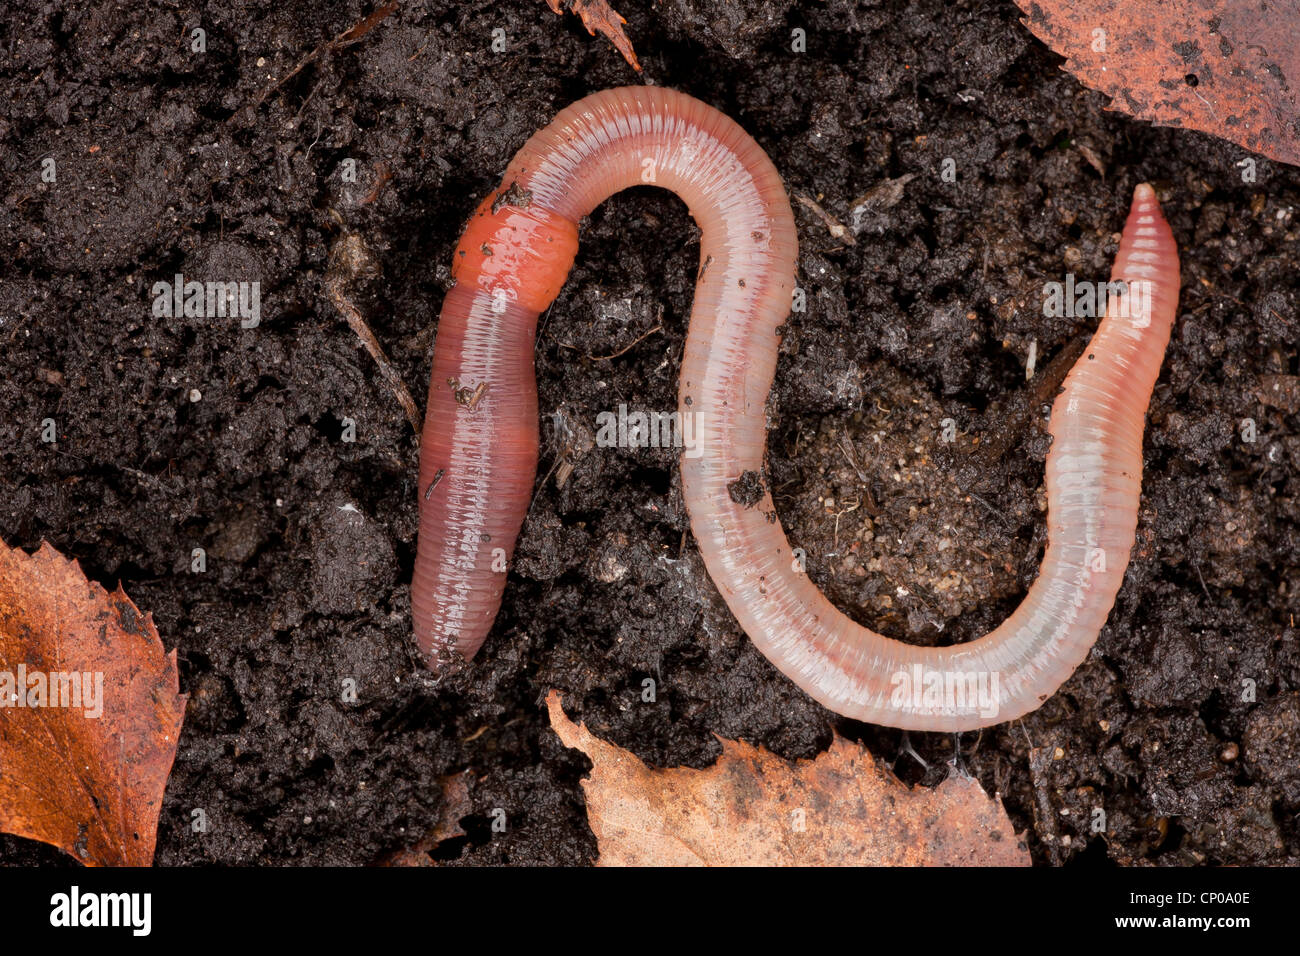 common earthworm, earthworm; lob worm, dew worm, squirreltail worm, twachel (Lumbricus terrestris), on the ground, Germany, Rhineland-Palatinate Stock Photo